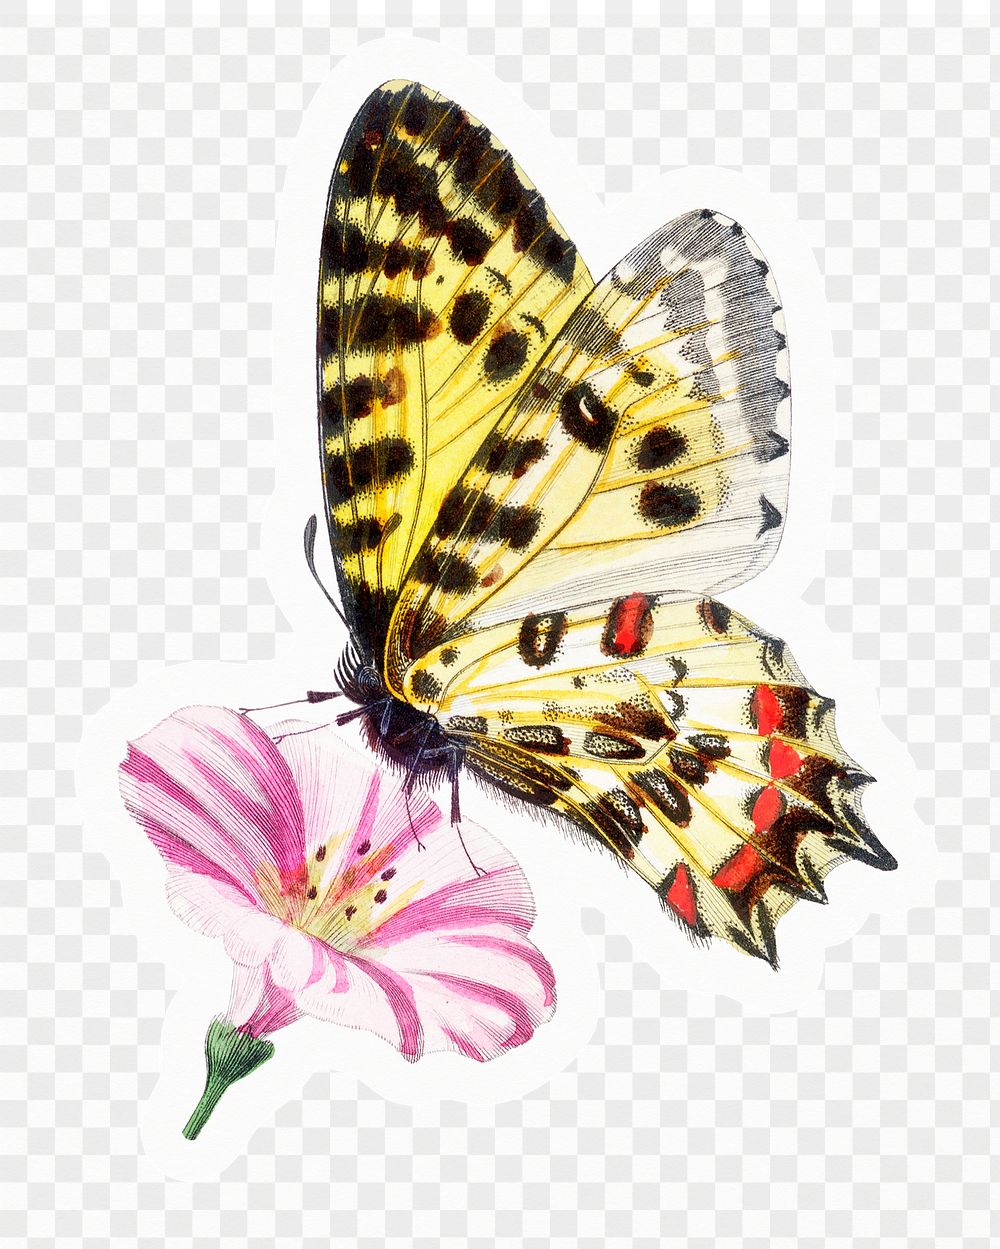 Butterfly png sticker, animal illustration, transparent background